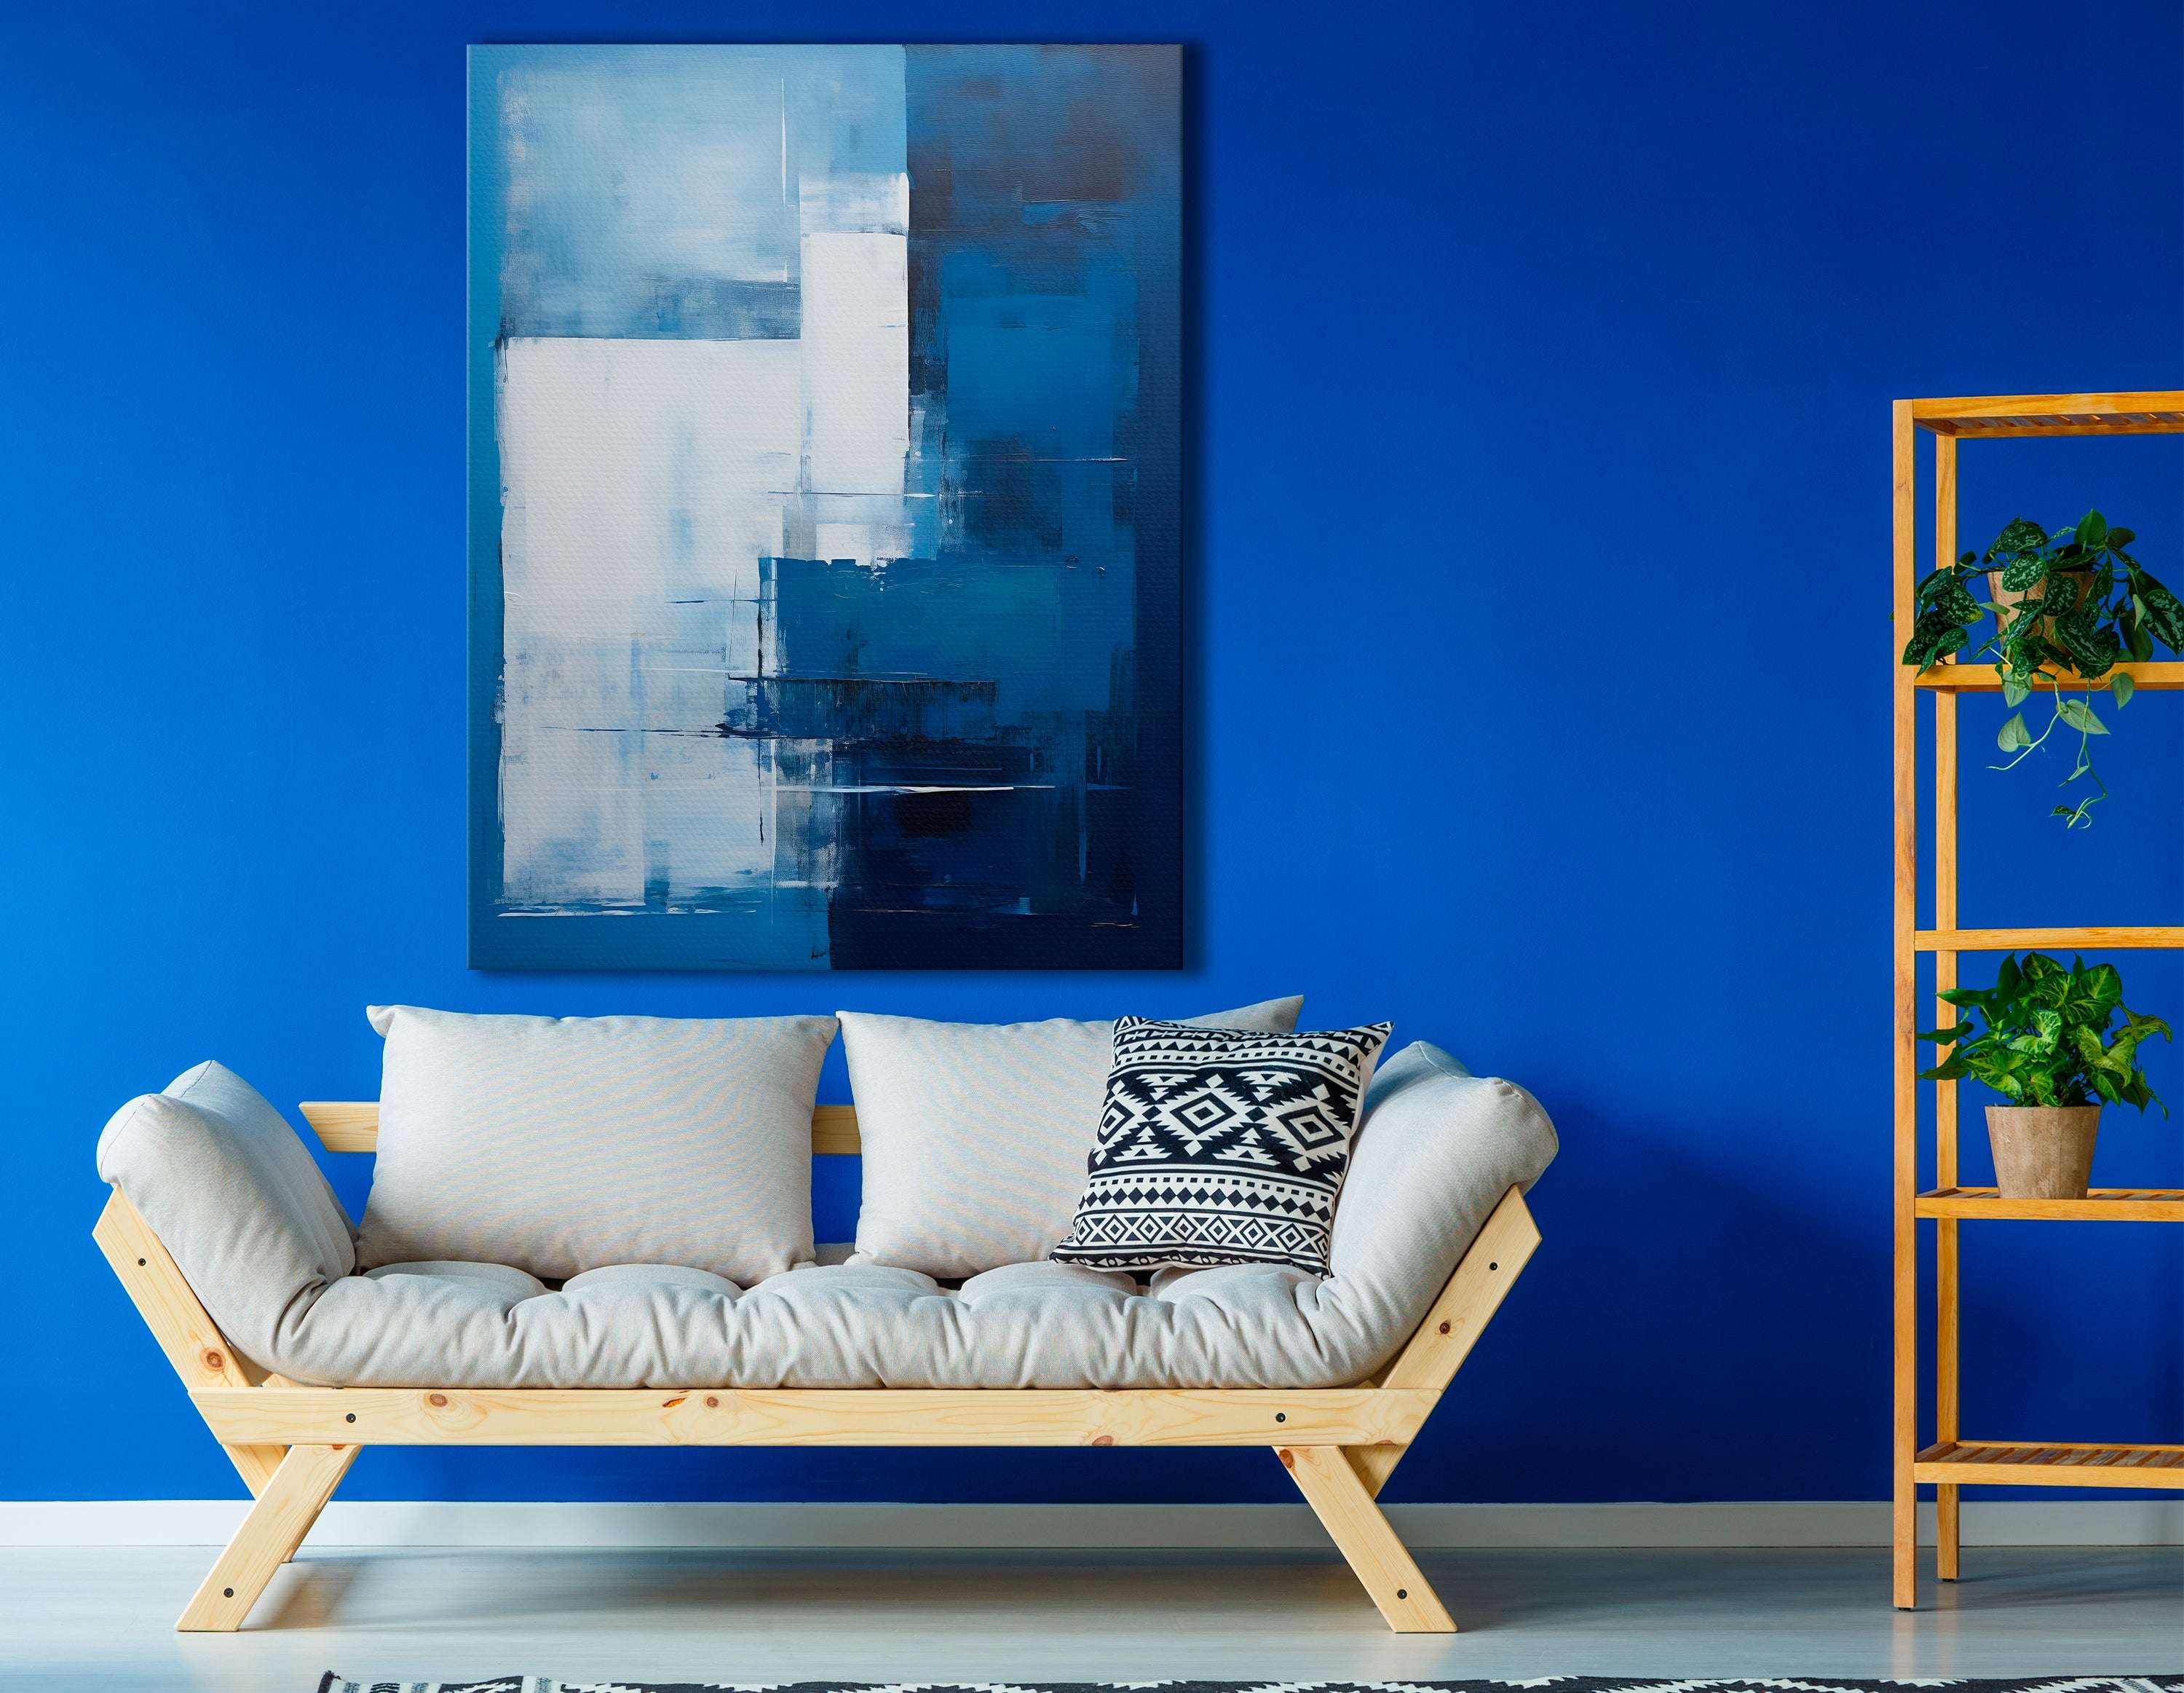 Abstract Blue Composition - Canvas Print - Artoholica Ready to Hang Canvas Print